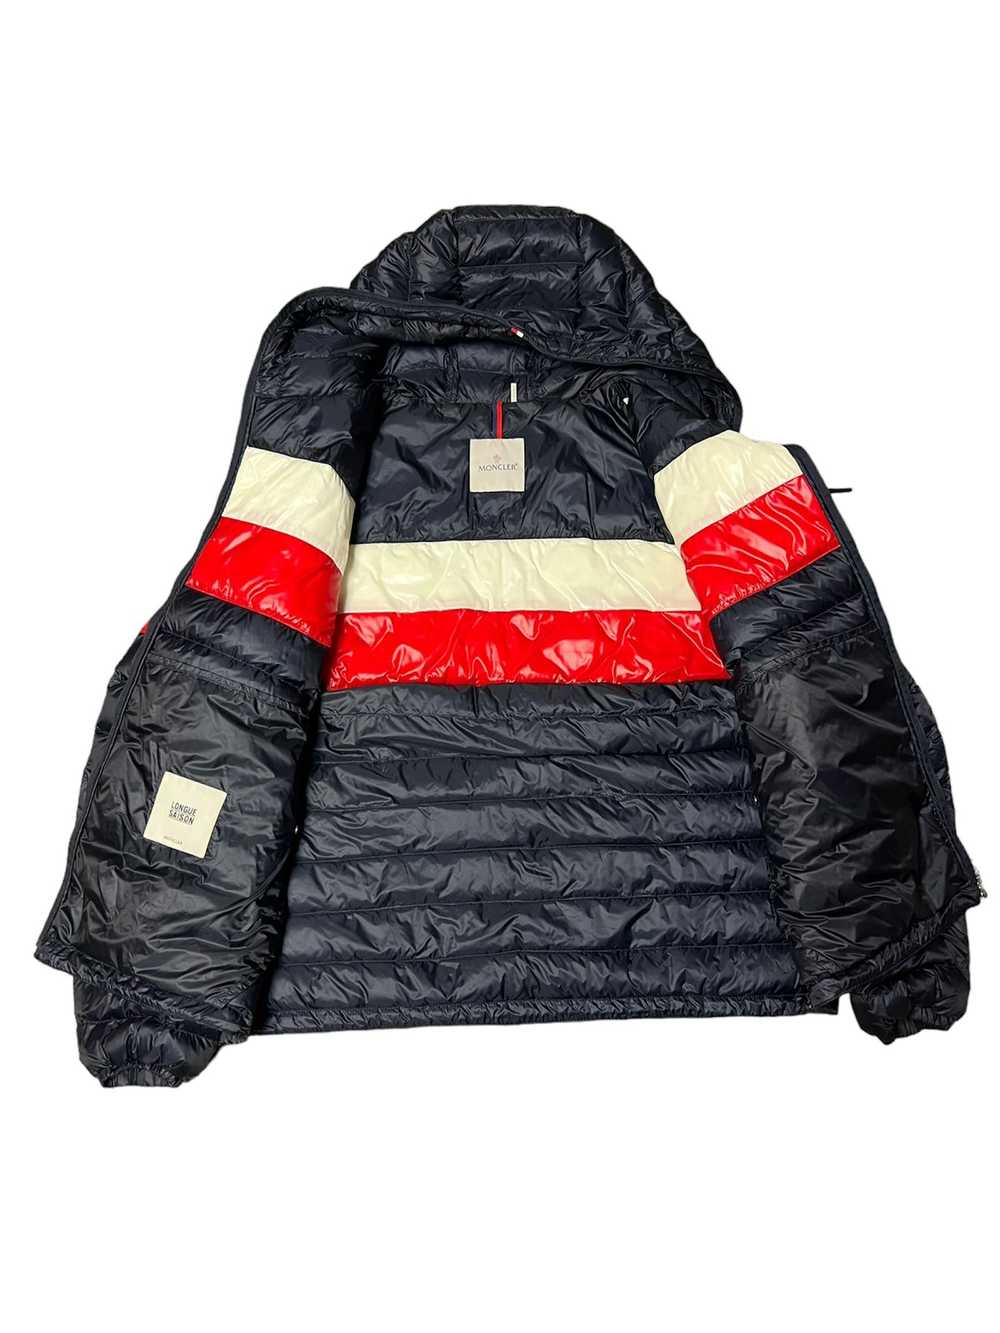 Moncler Moncler Light Puffer Jacket size 7 - image 5